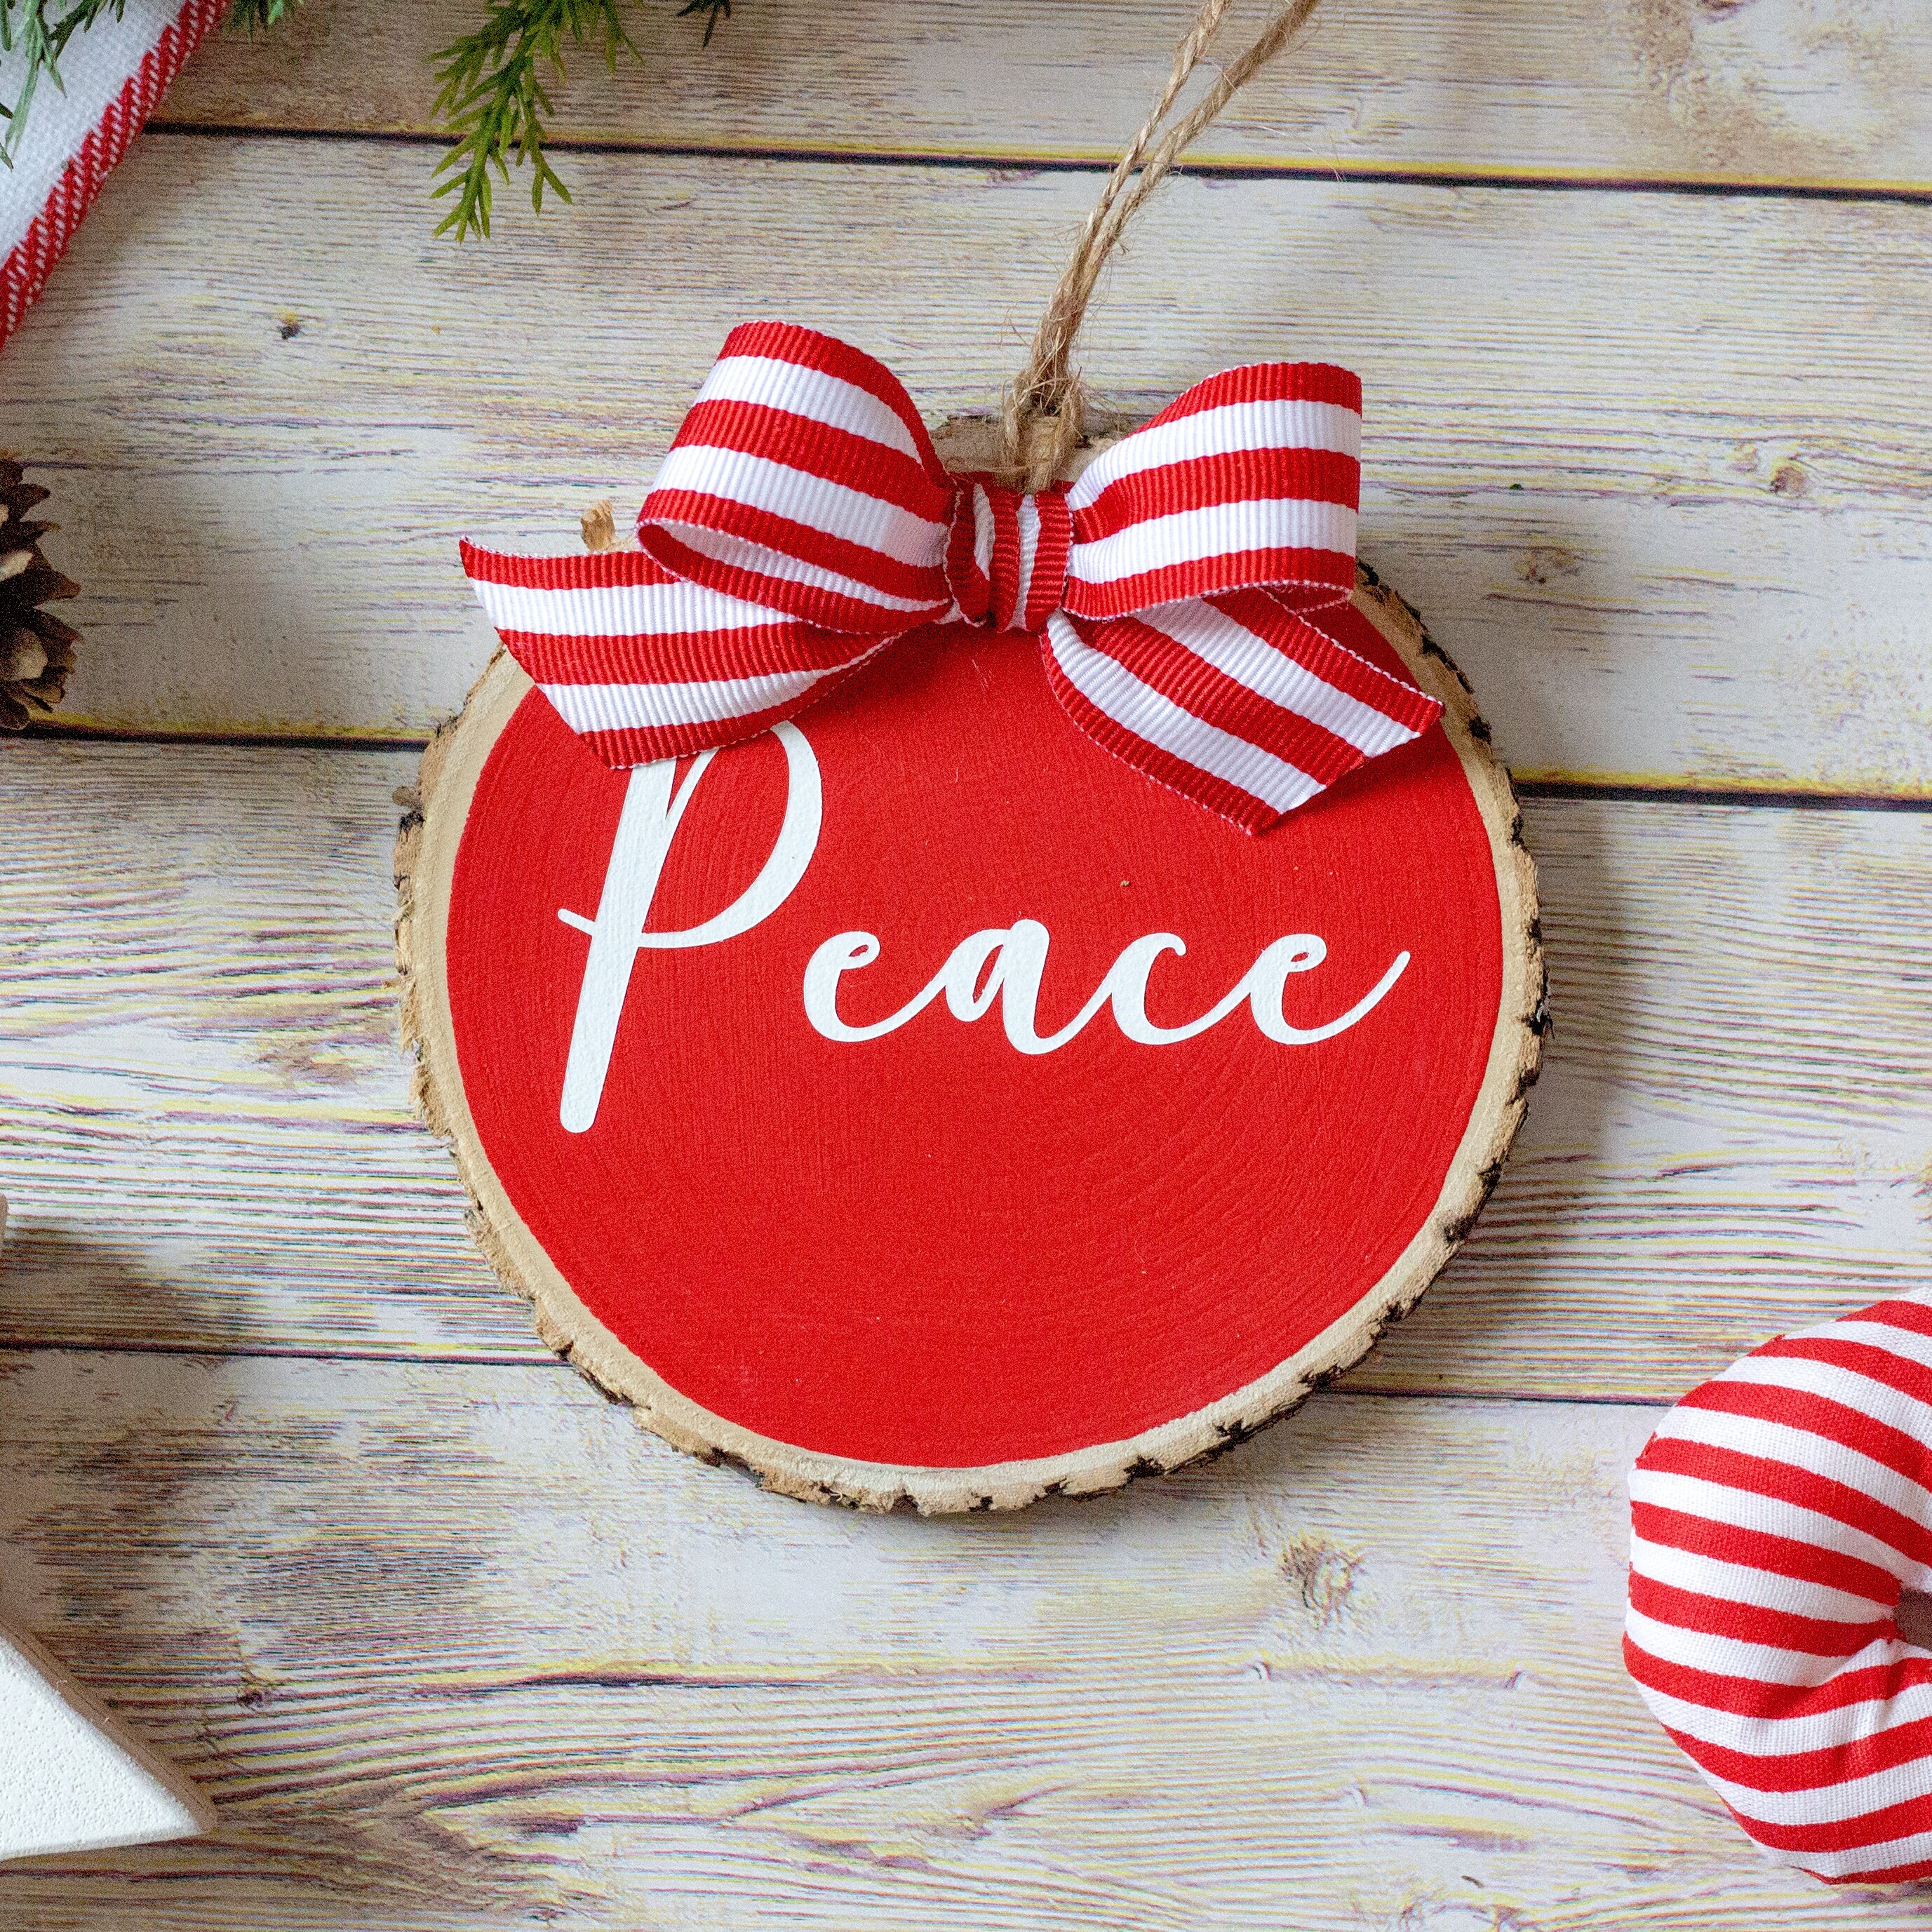 Farmhouse Christmas Ornaments Set of 3  Red White Wood Slices - Believe  Noel Joy